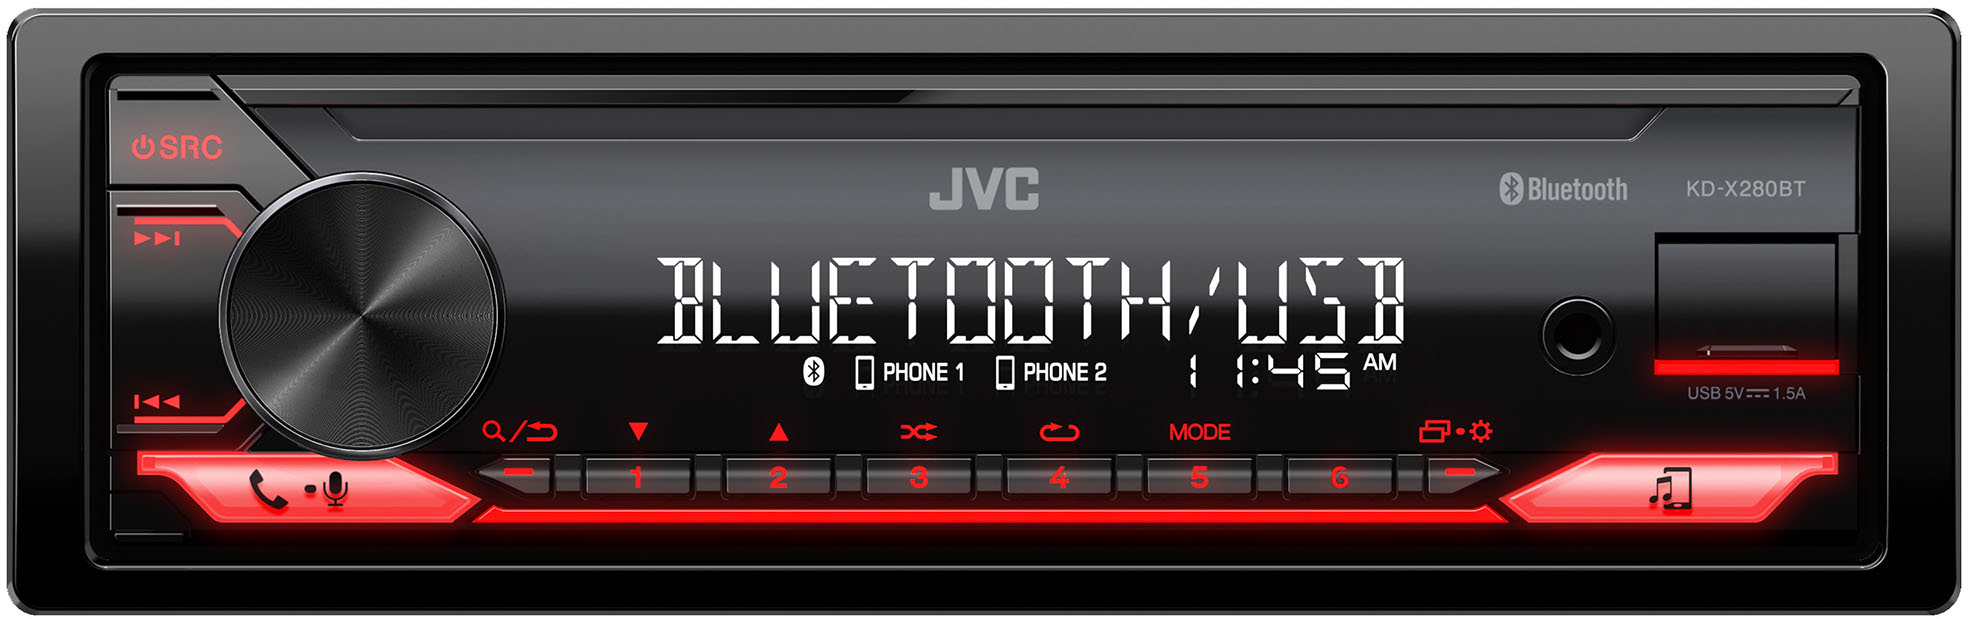 Car Entertainment｜JVC USA - Products 